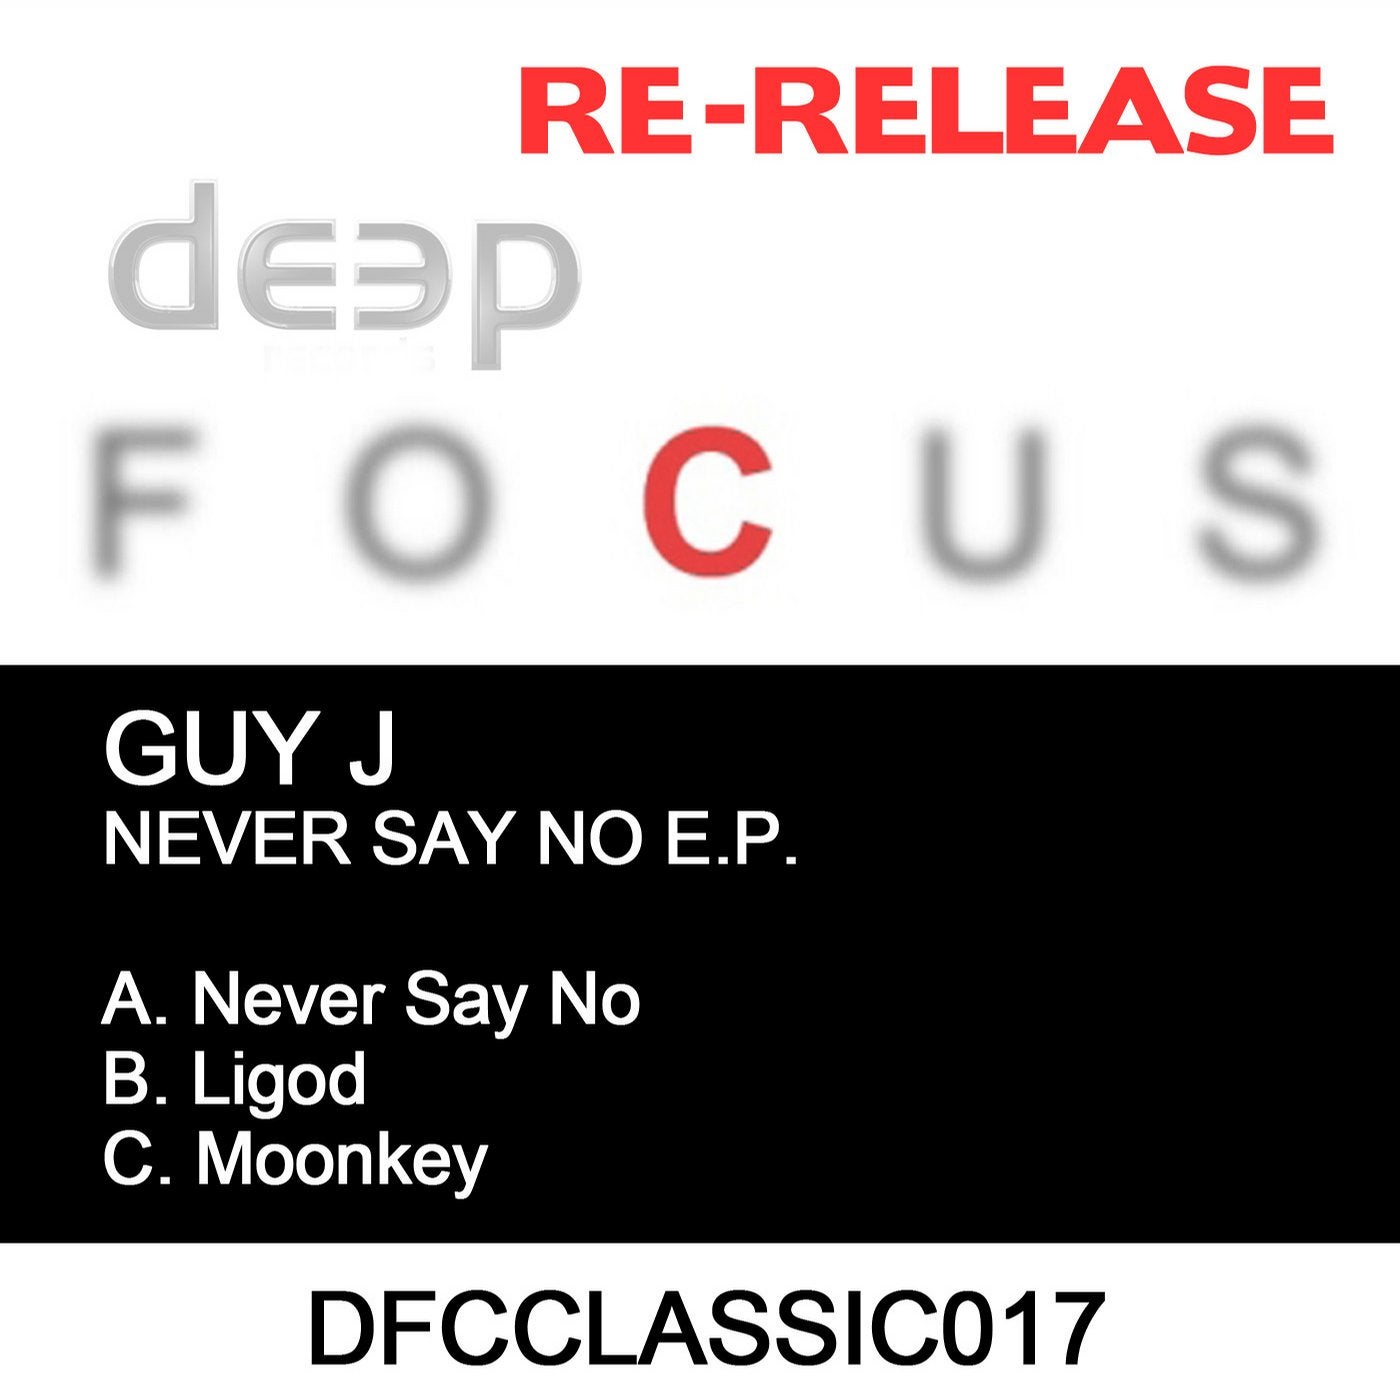 Never Say No EP